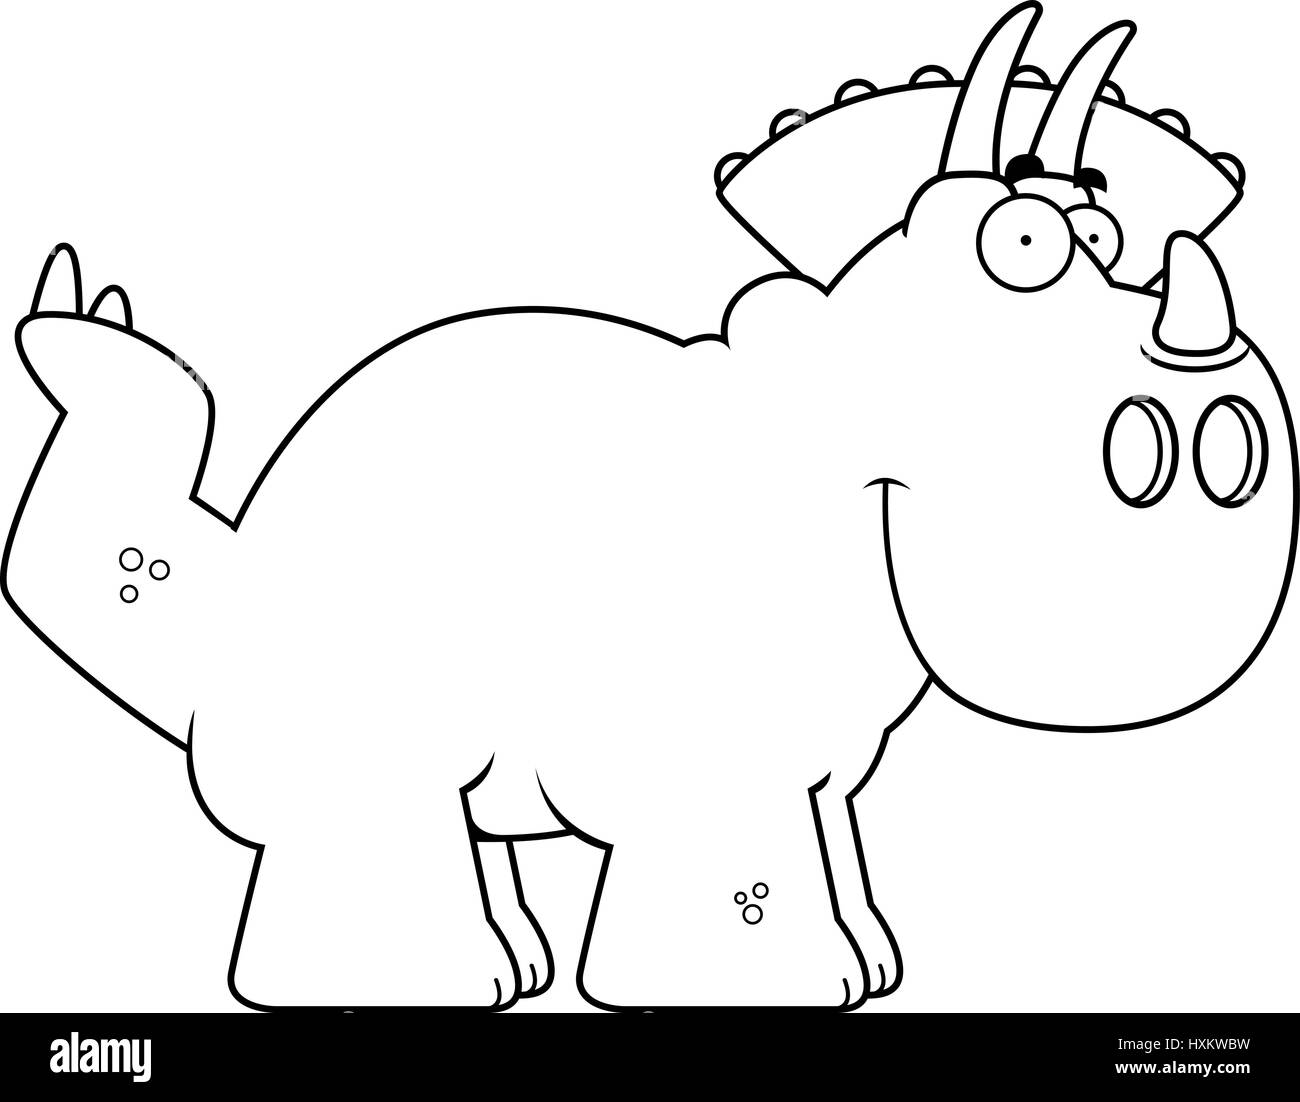 A cartoon illustration of a Triceratops dinosaur smiling. Stock Vector